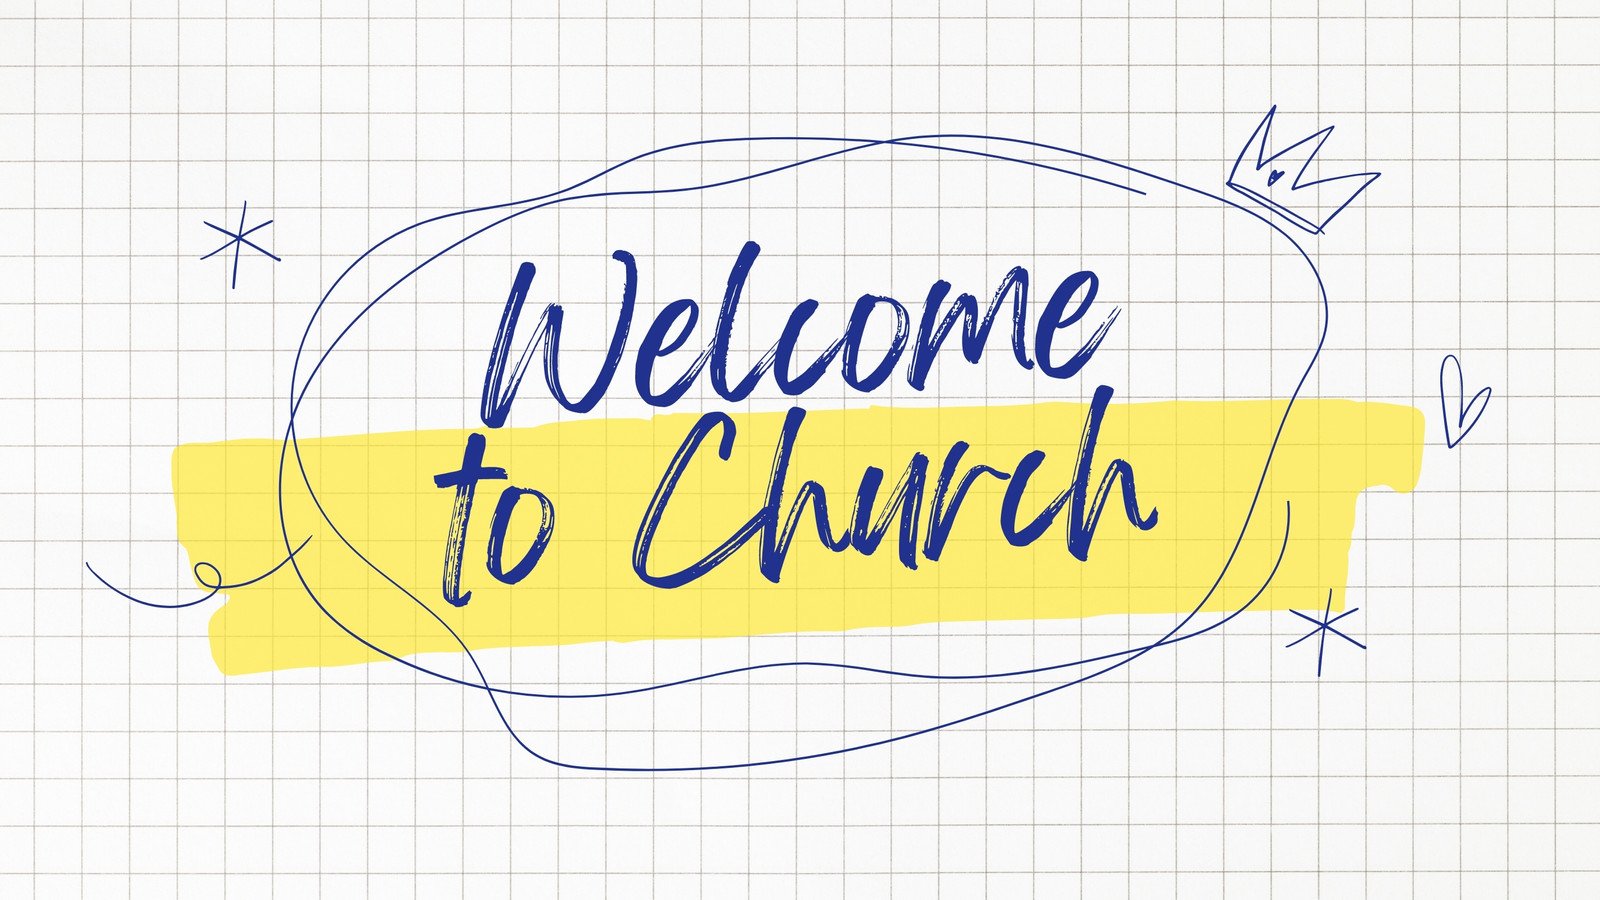 Free and customizable church presentation templates | Canva